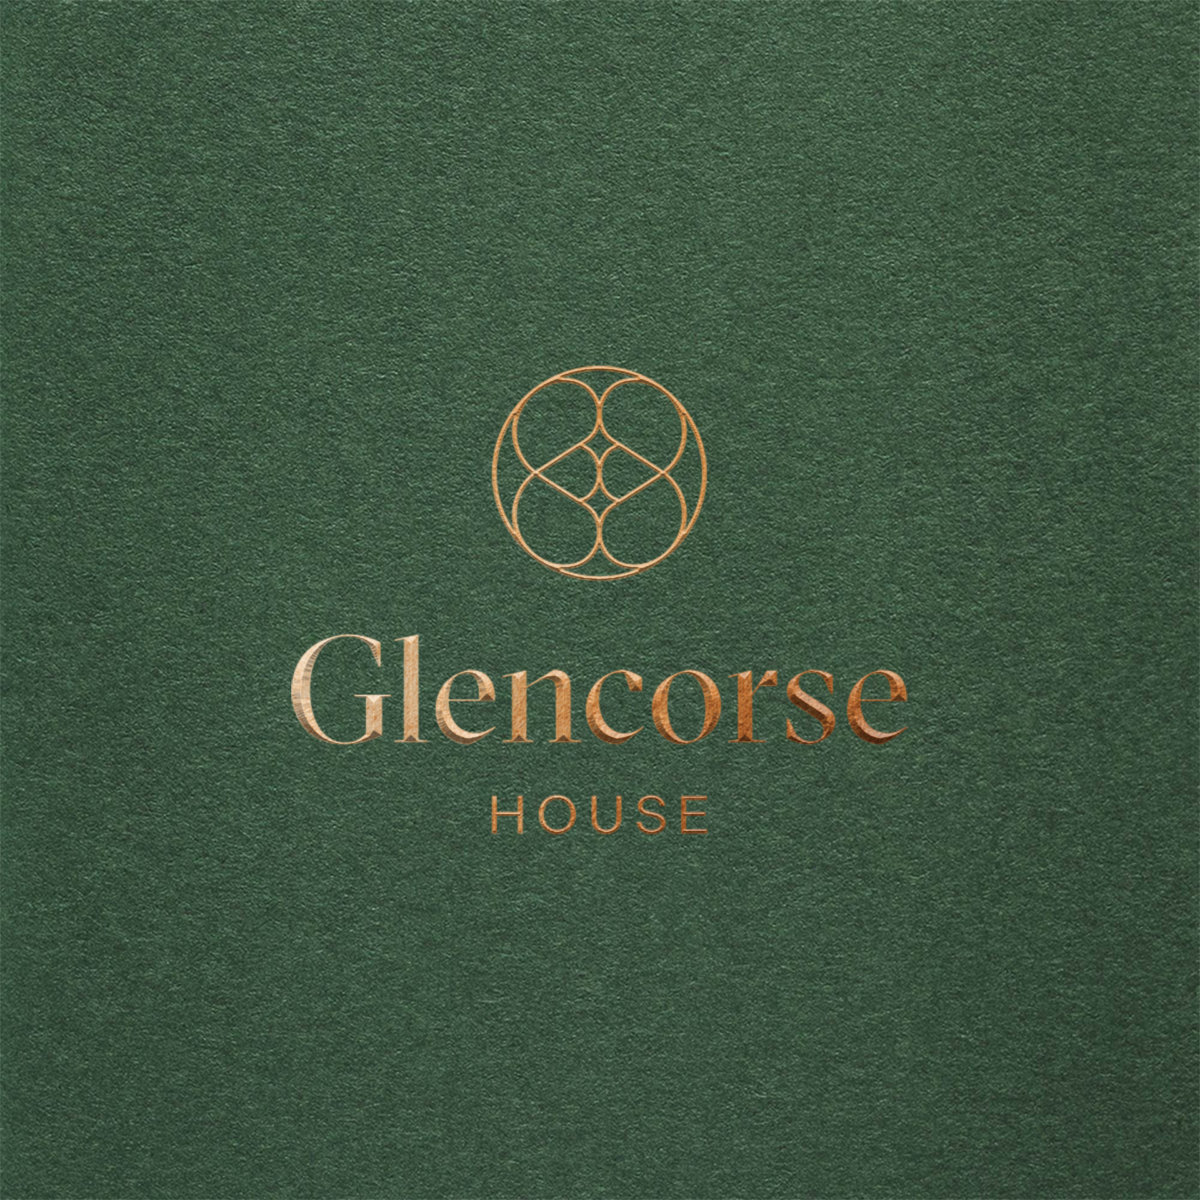 Glencorse House - Rhys George